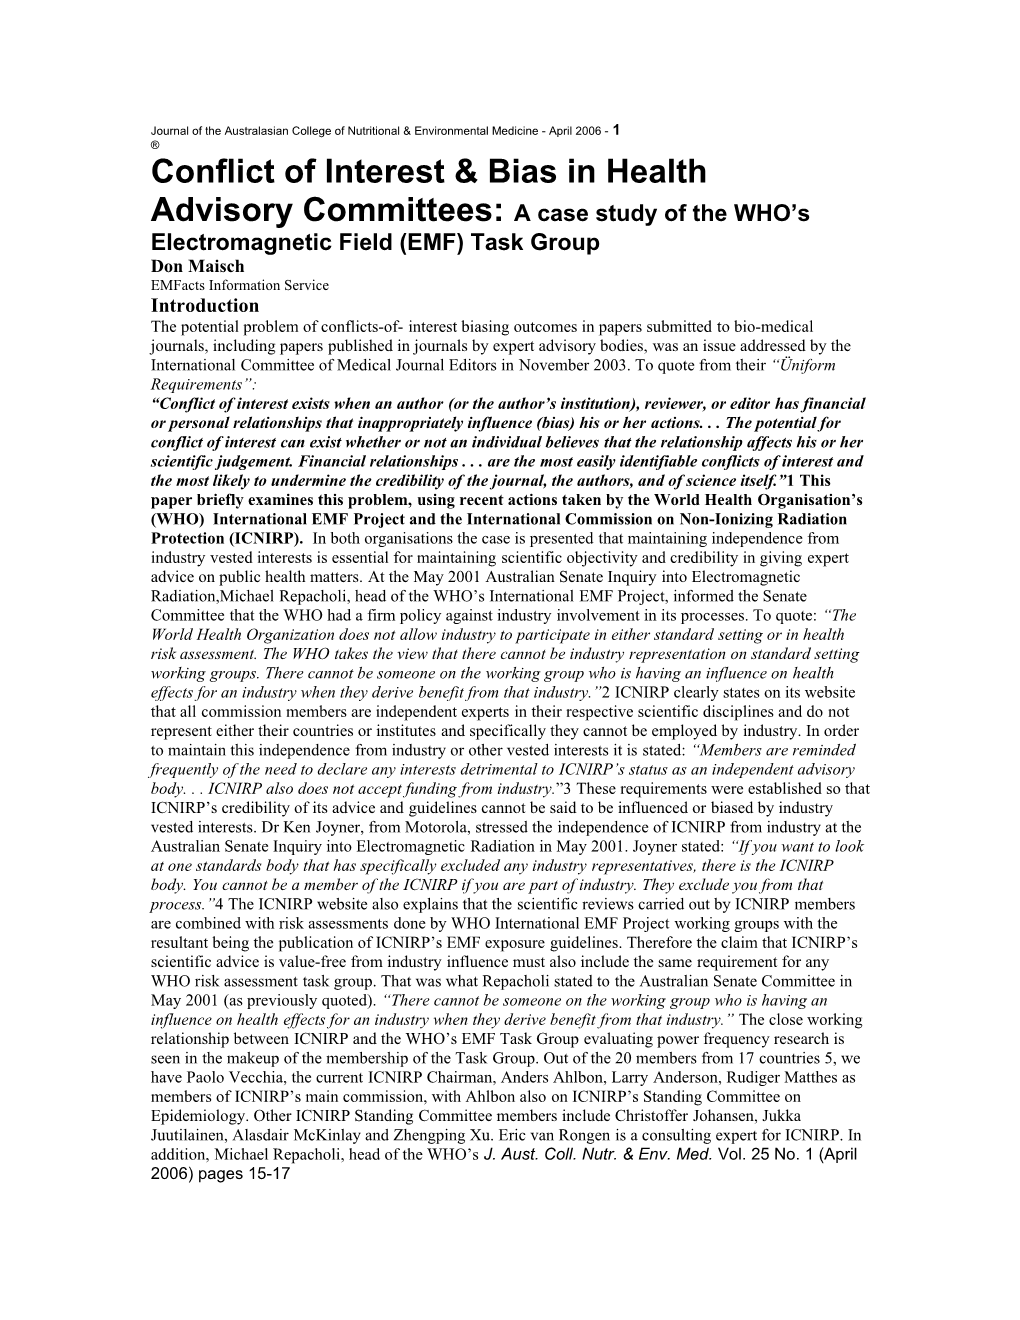 Conflict of Interest & Bias in Health